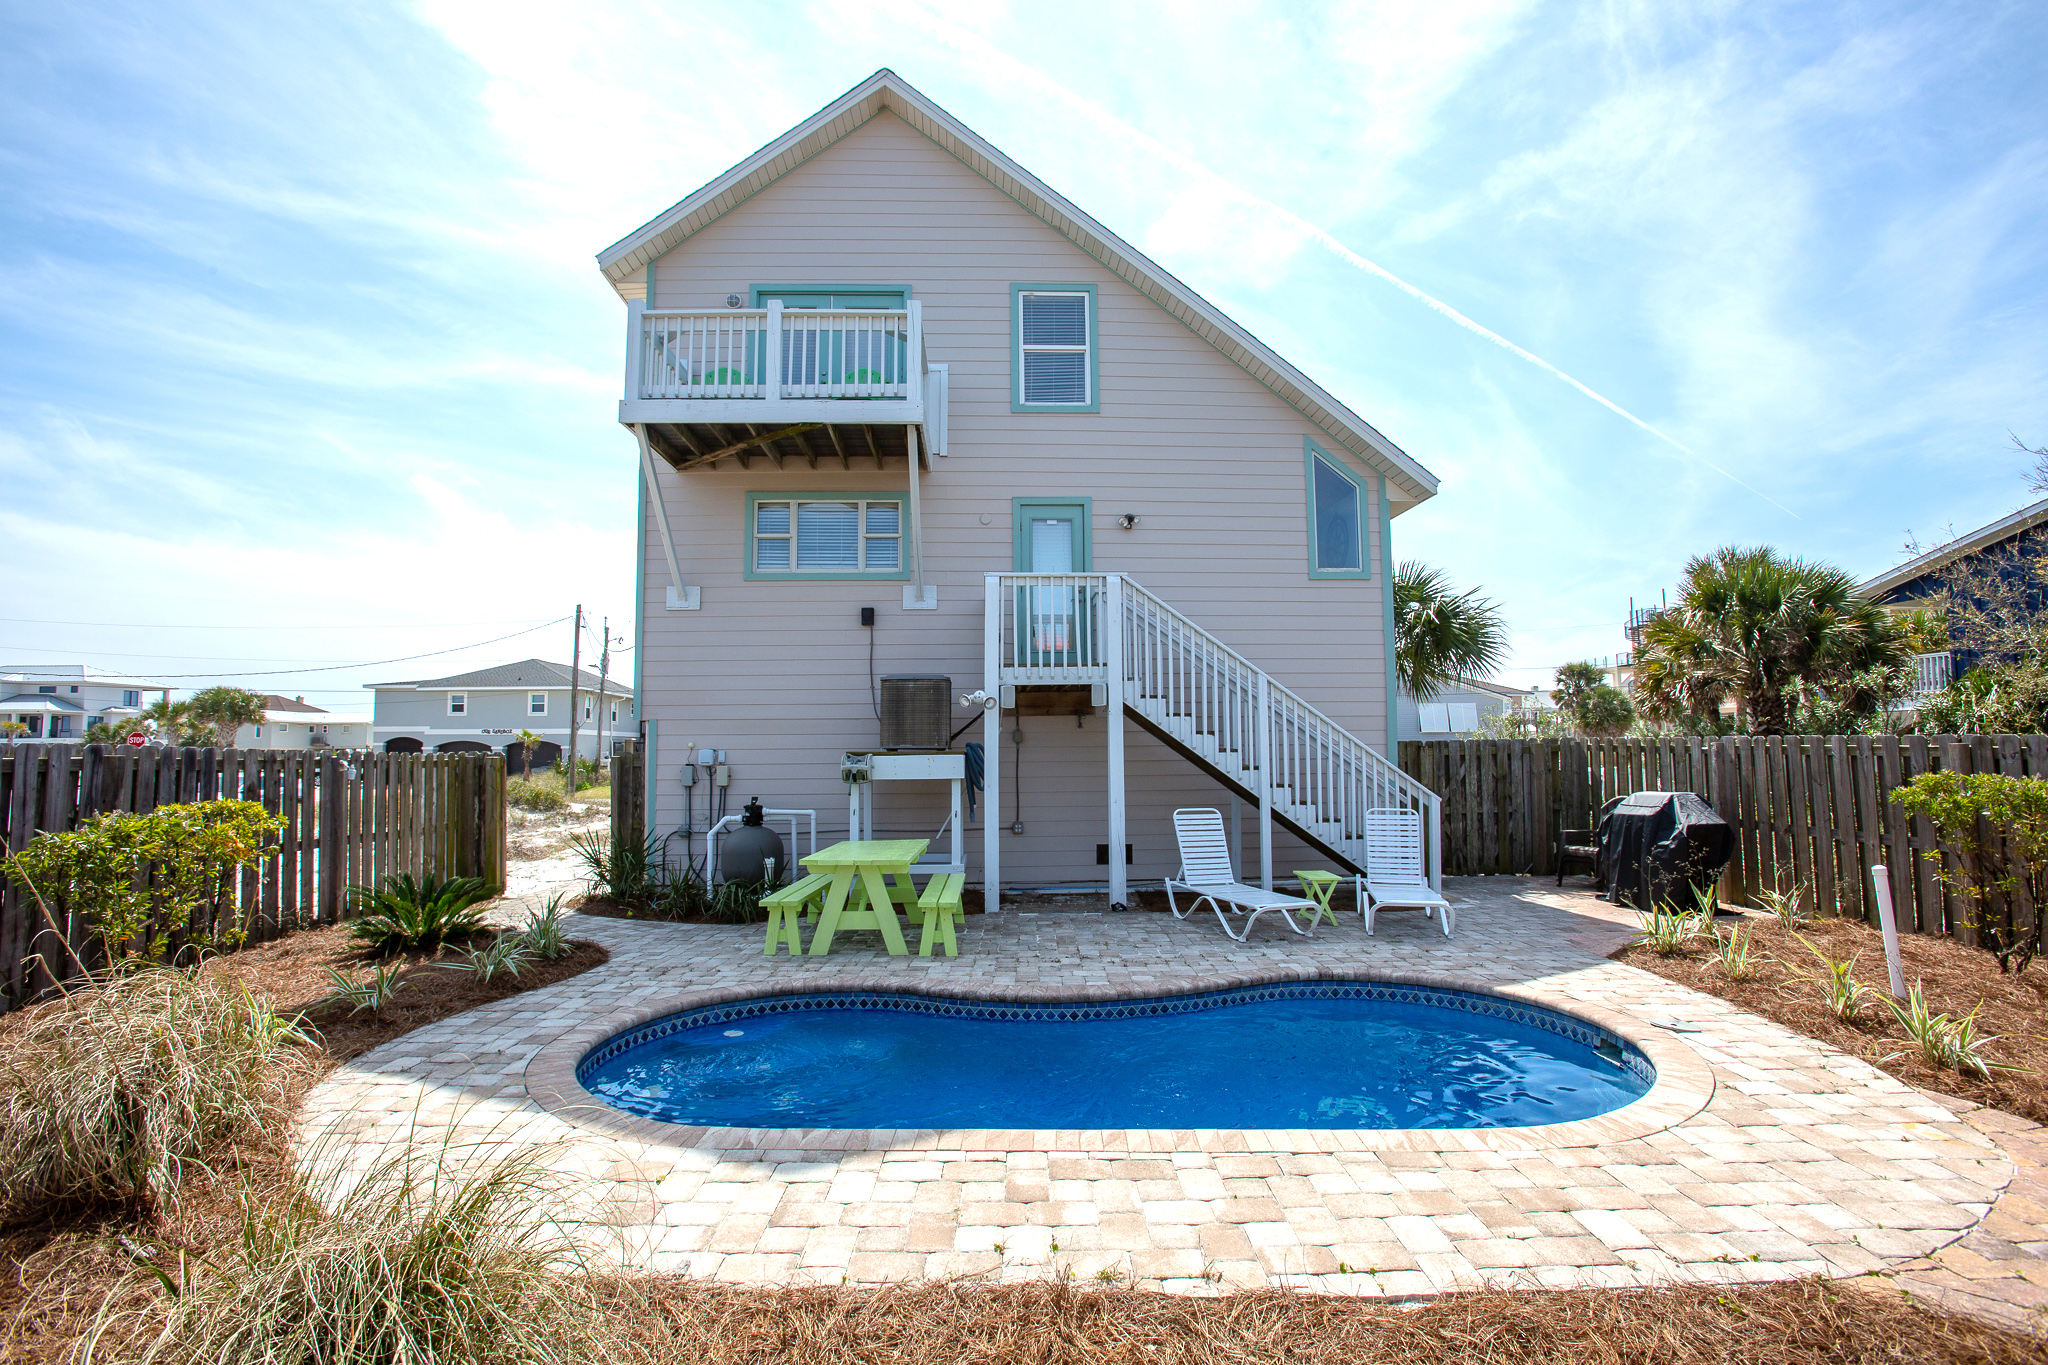 Maldonado 813 - The Lazee Lagoon Beach House House / Cottage rental in Pensacola Beach House Rentals in Pensacola Beach Florida - #10